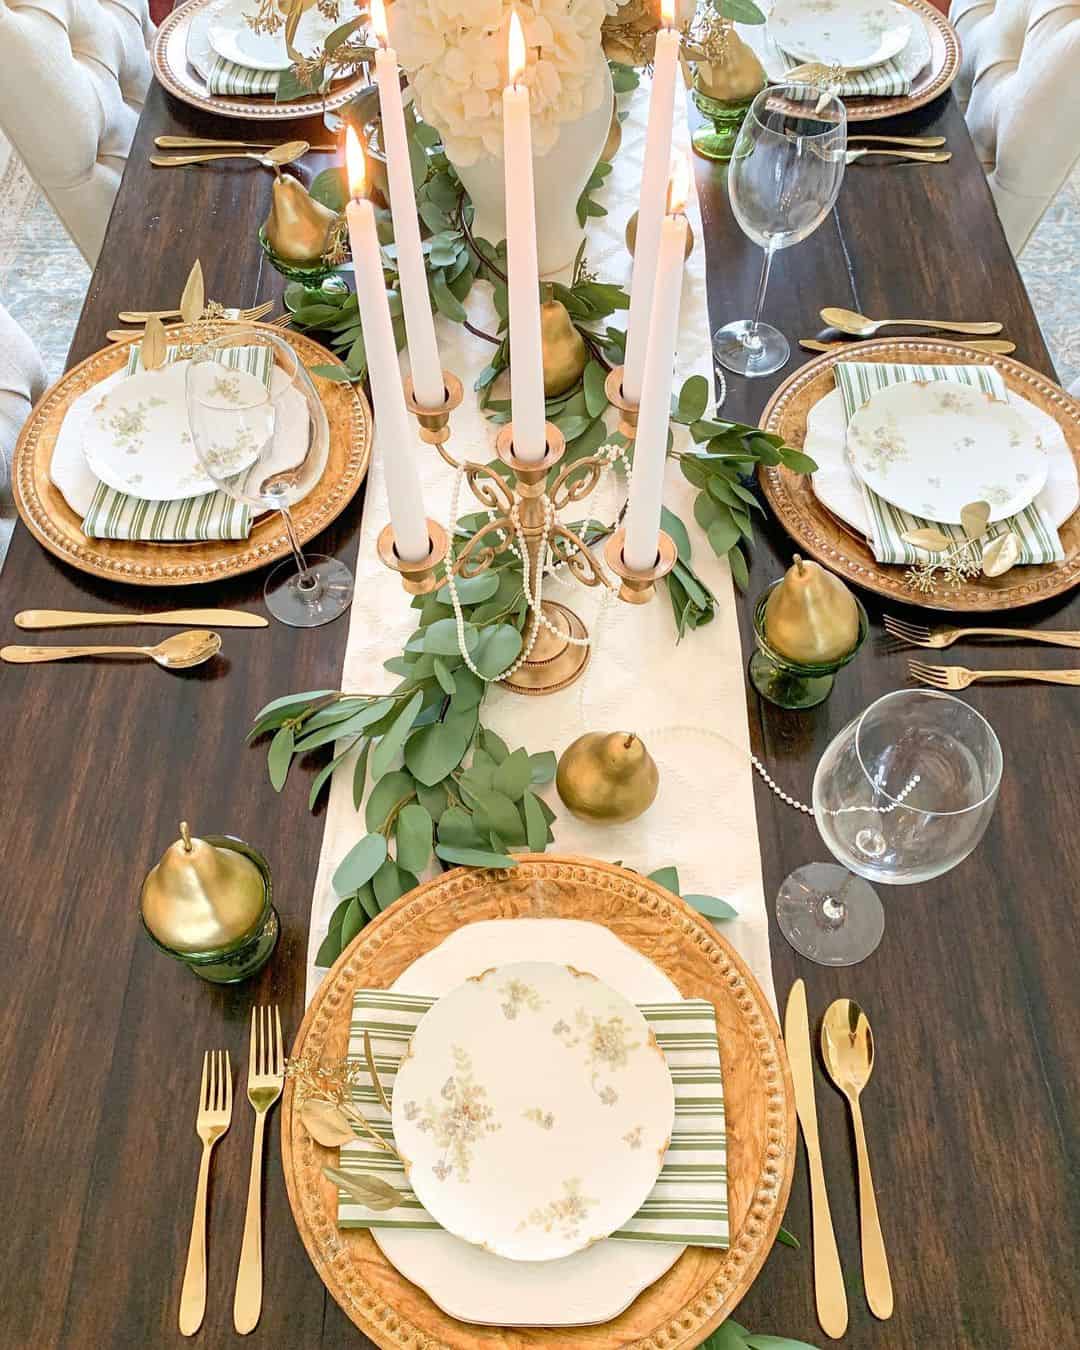 Gold Embellishments Enhance Dark Wood Table - Soul & Lane